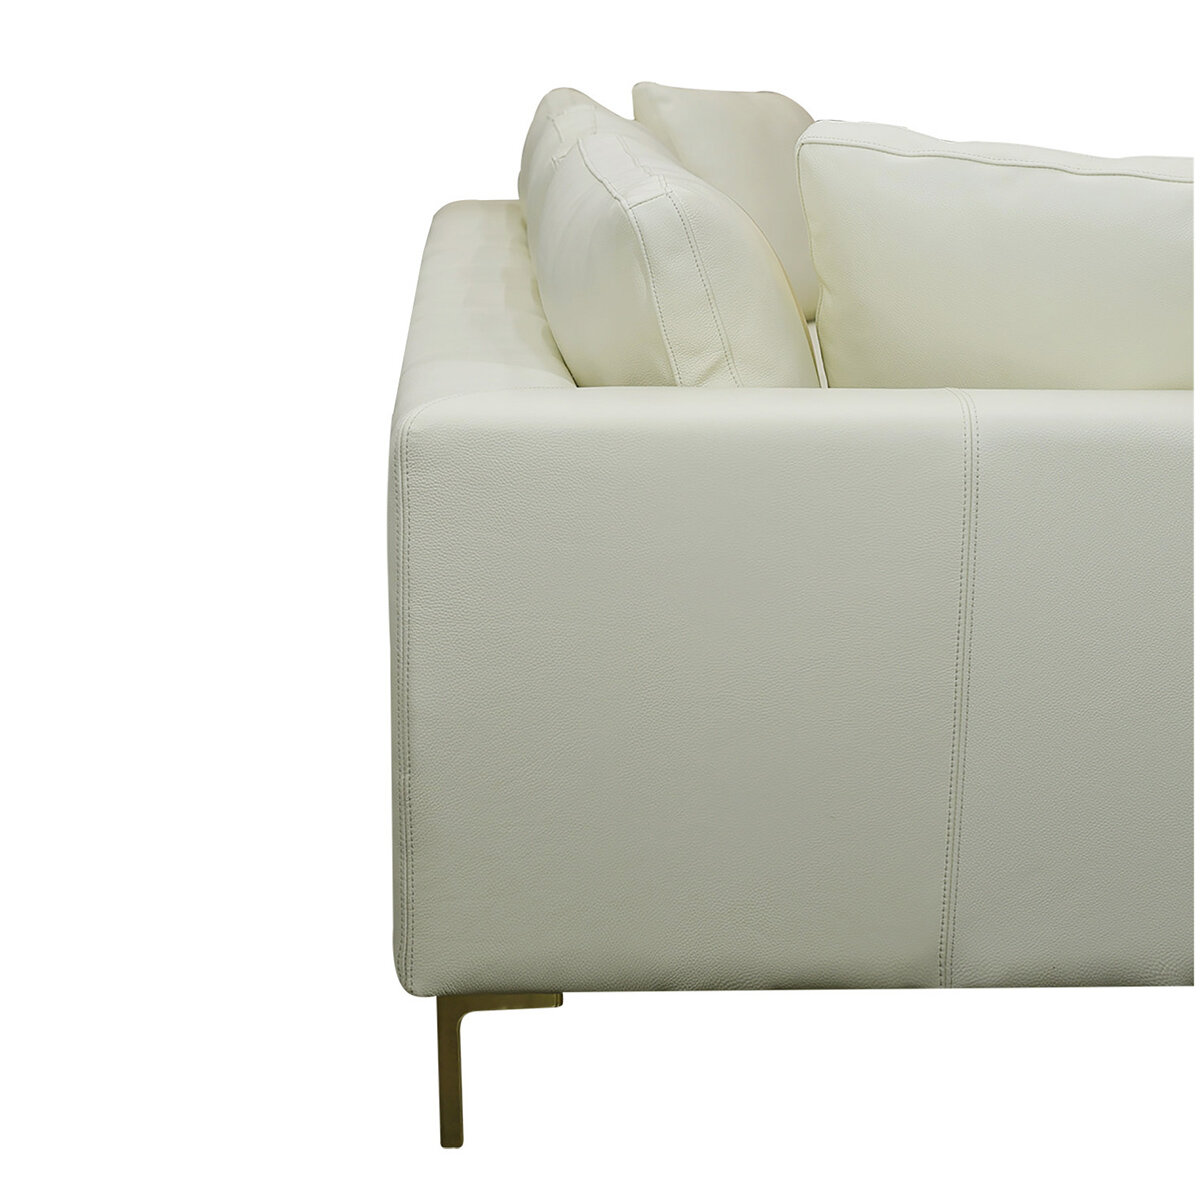 Moran Pico 3.5 Seater Sofa With Right Chaise Sterling Vanilla